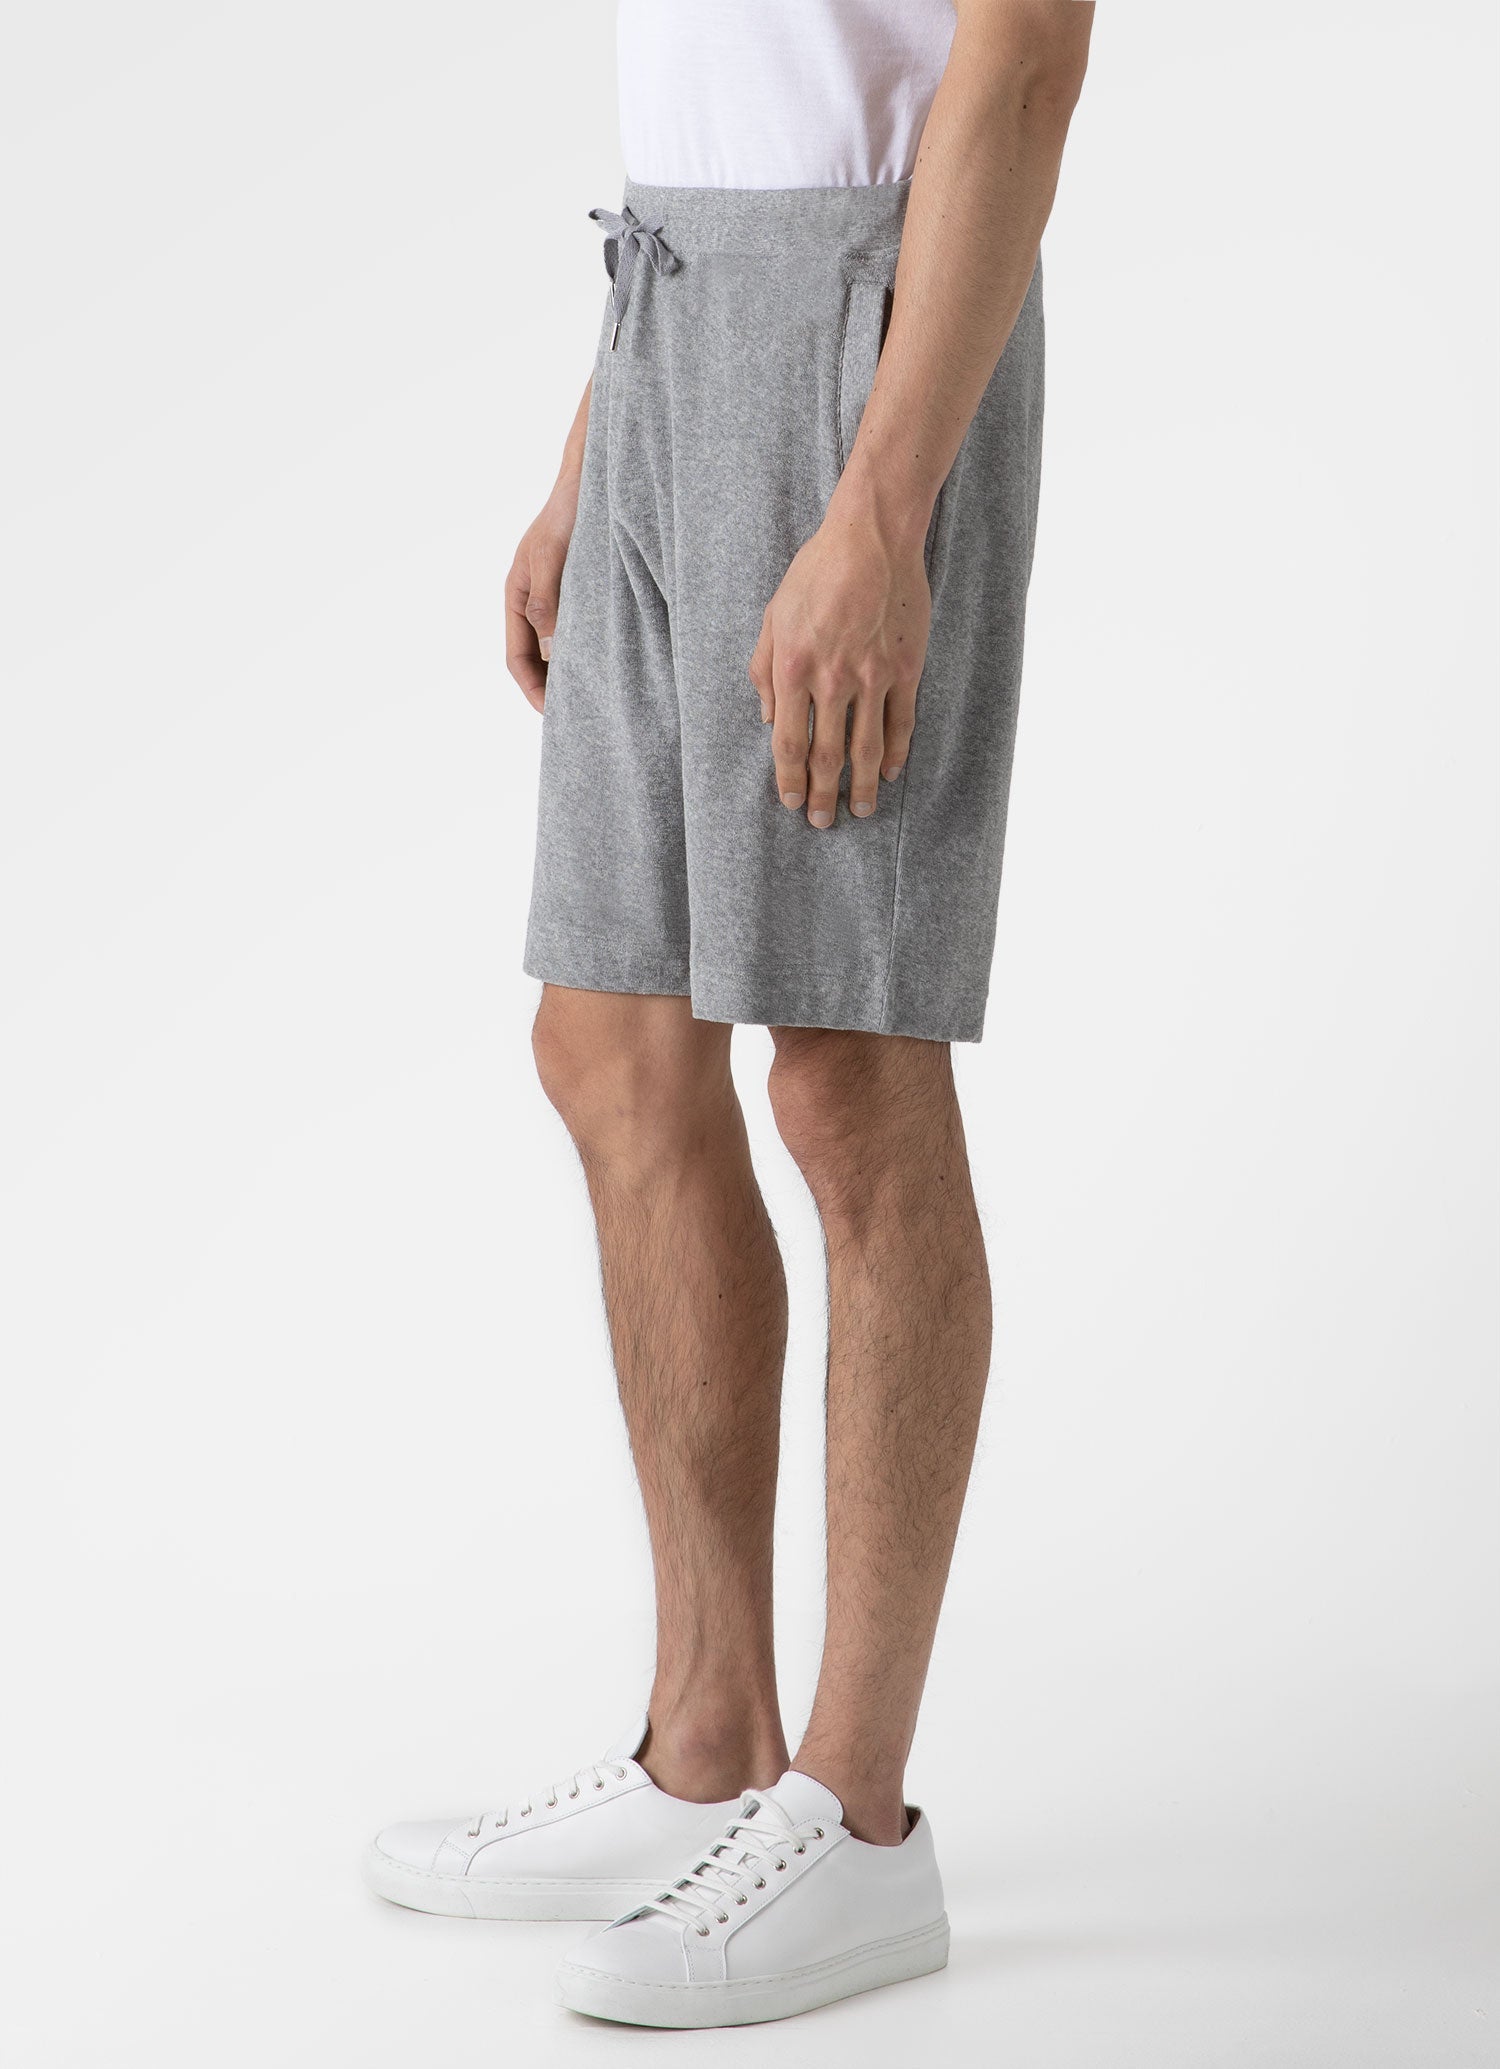 Men's Towelling Short in Grey Melange